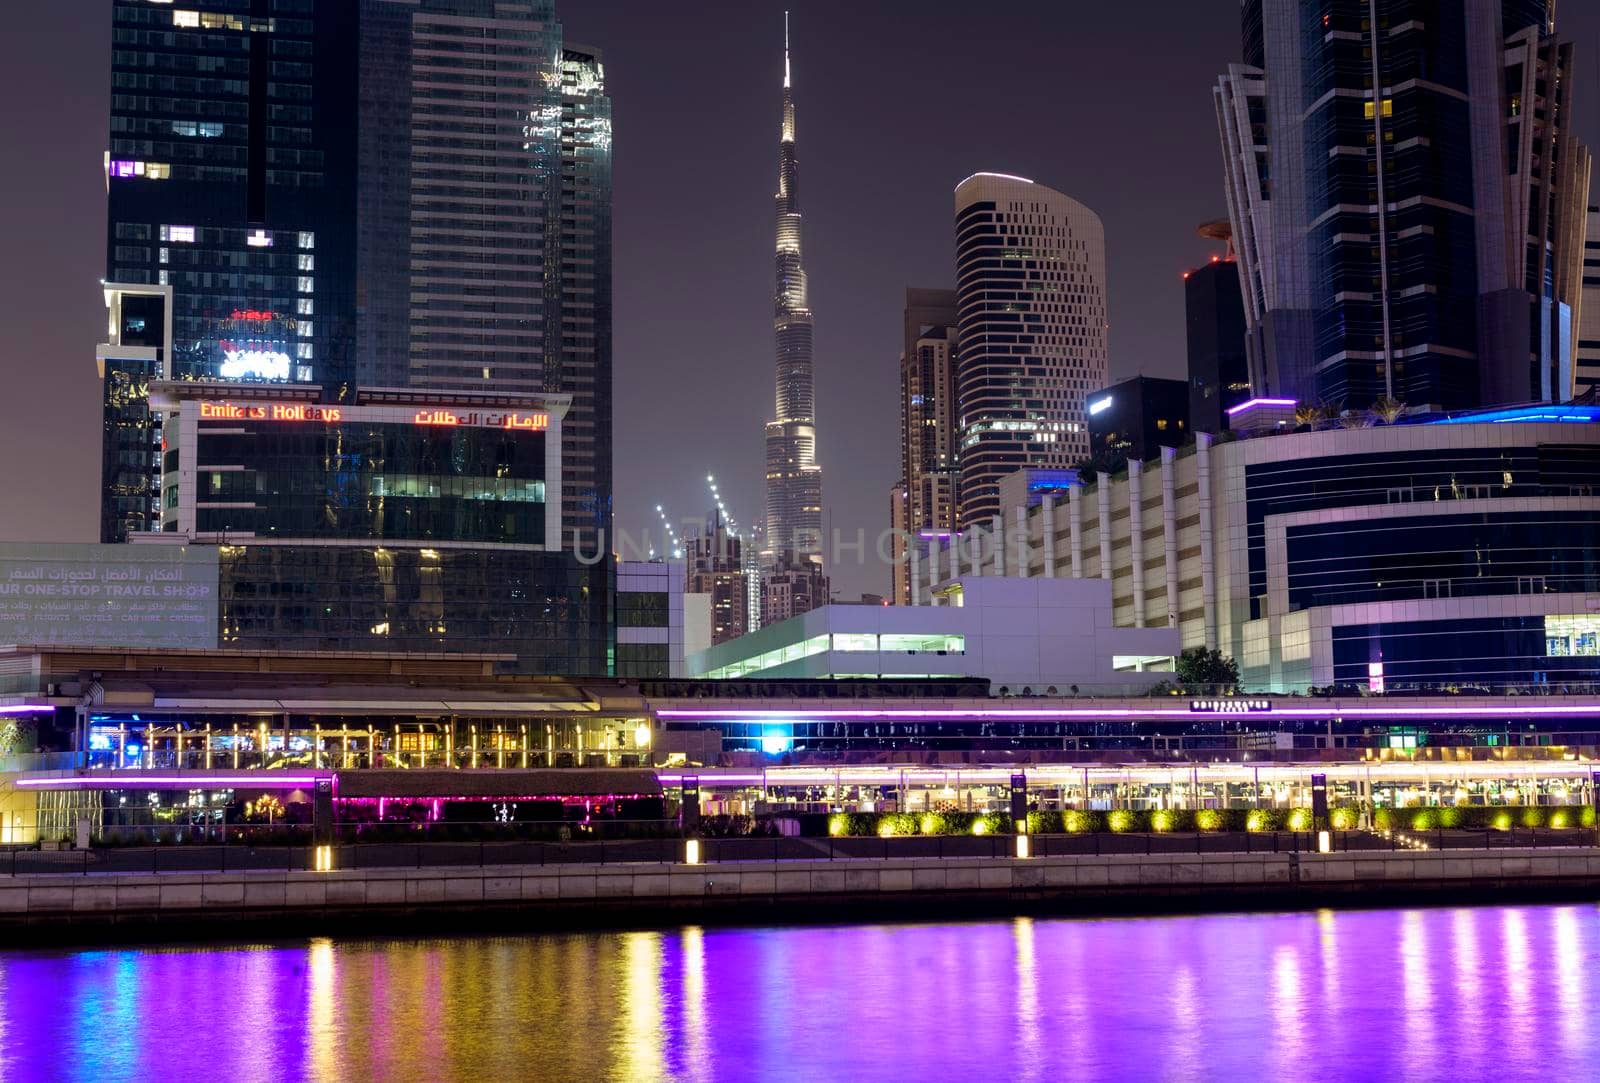 DUBAI, UAE 6th nov 2020 -view of the Burj khalifa surrounded with buildings and hotels facing the Colorful illuminated dubai canal boardwalk Waterfall in Dubai,United Arab Emirates, Middle East